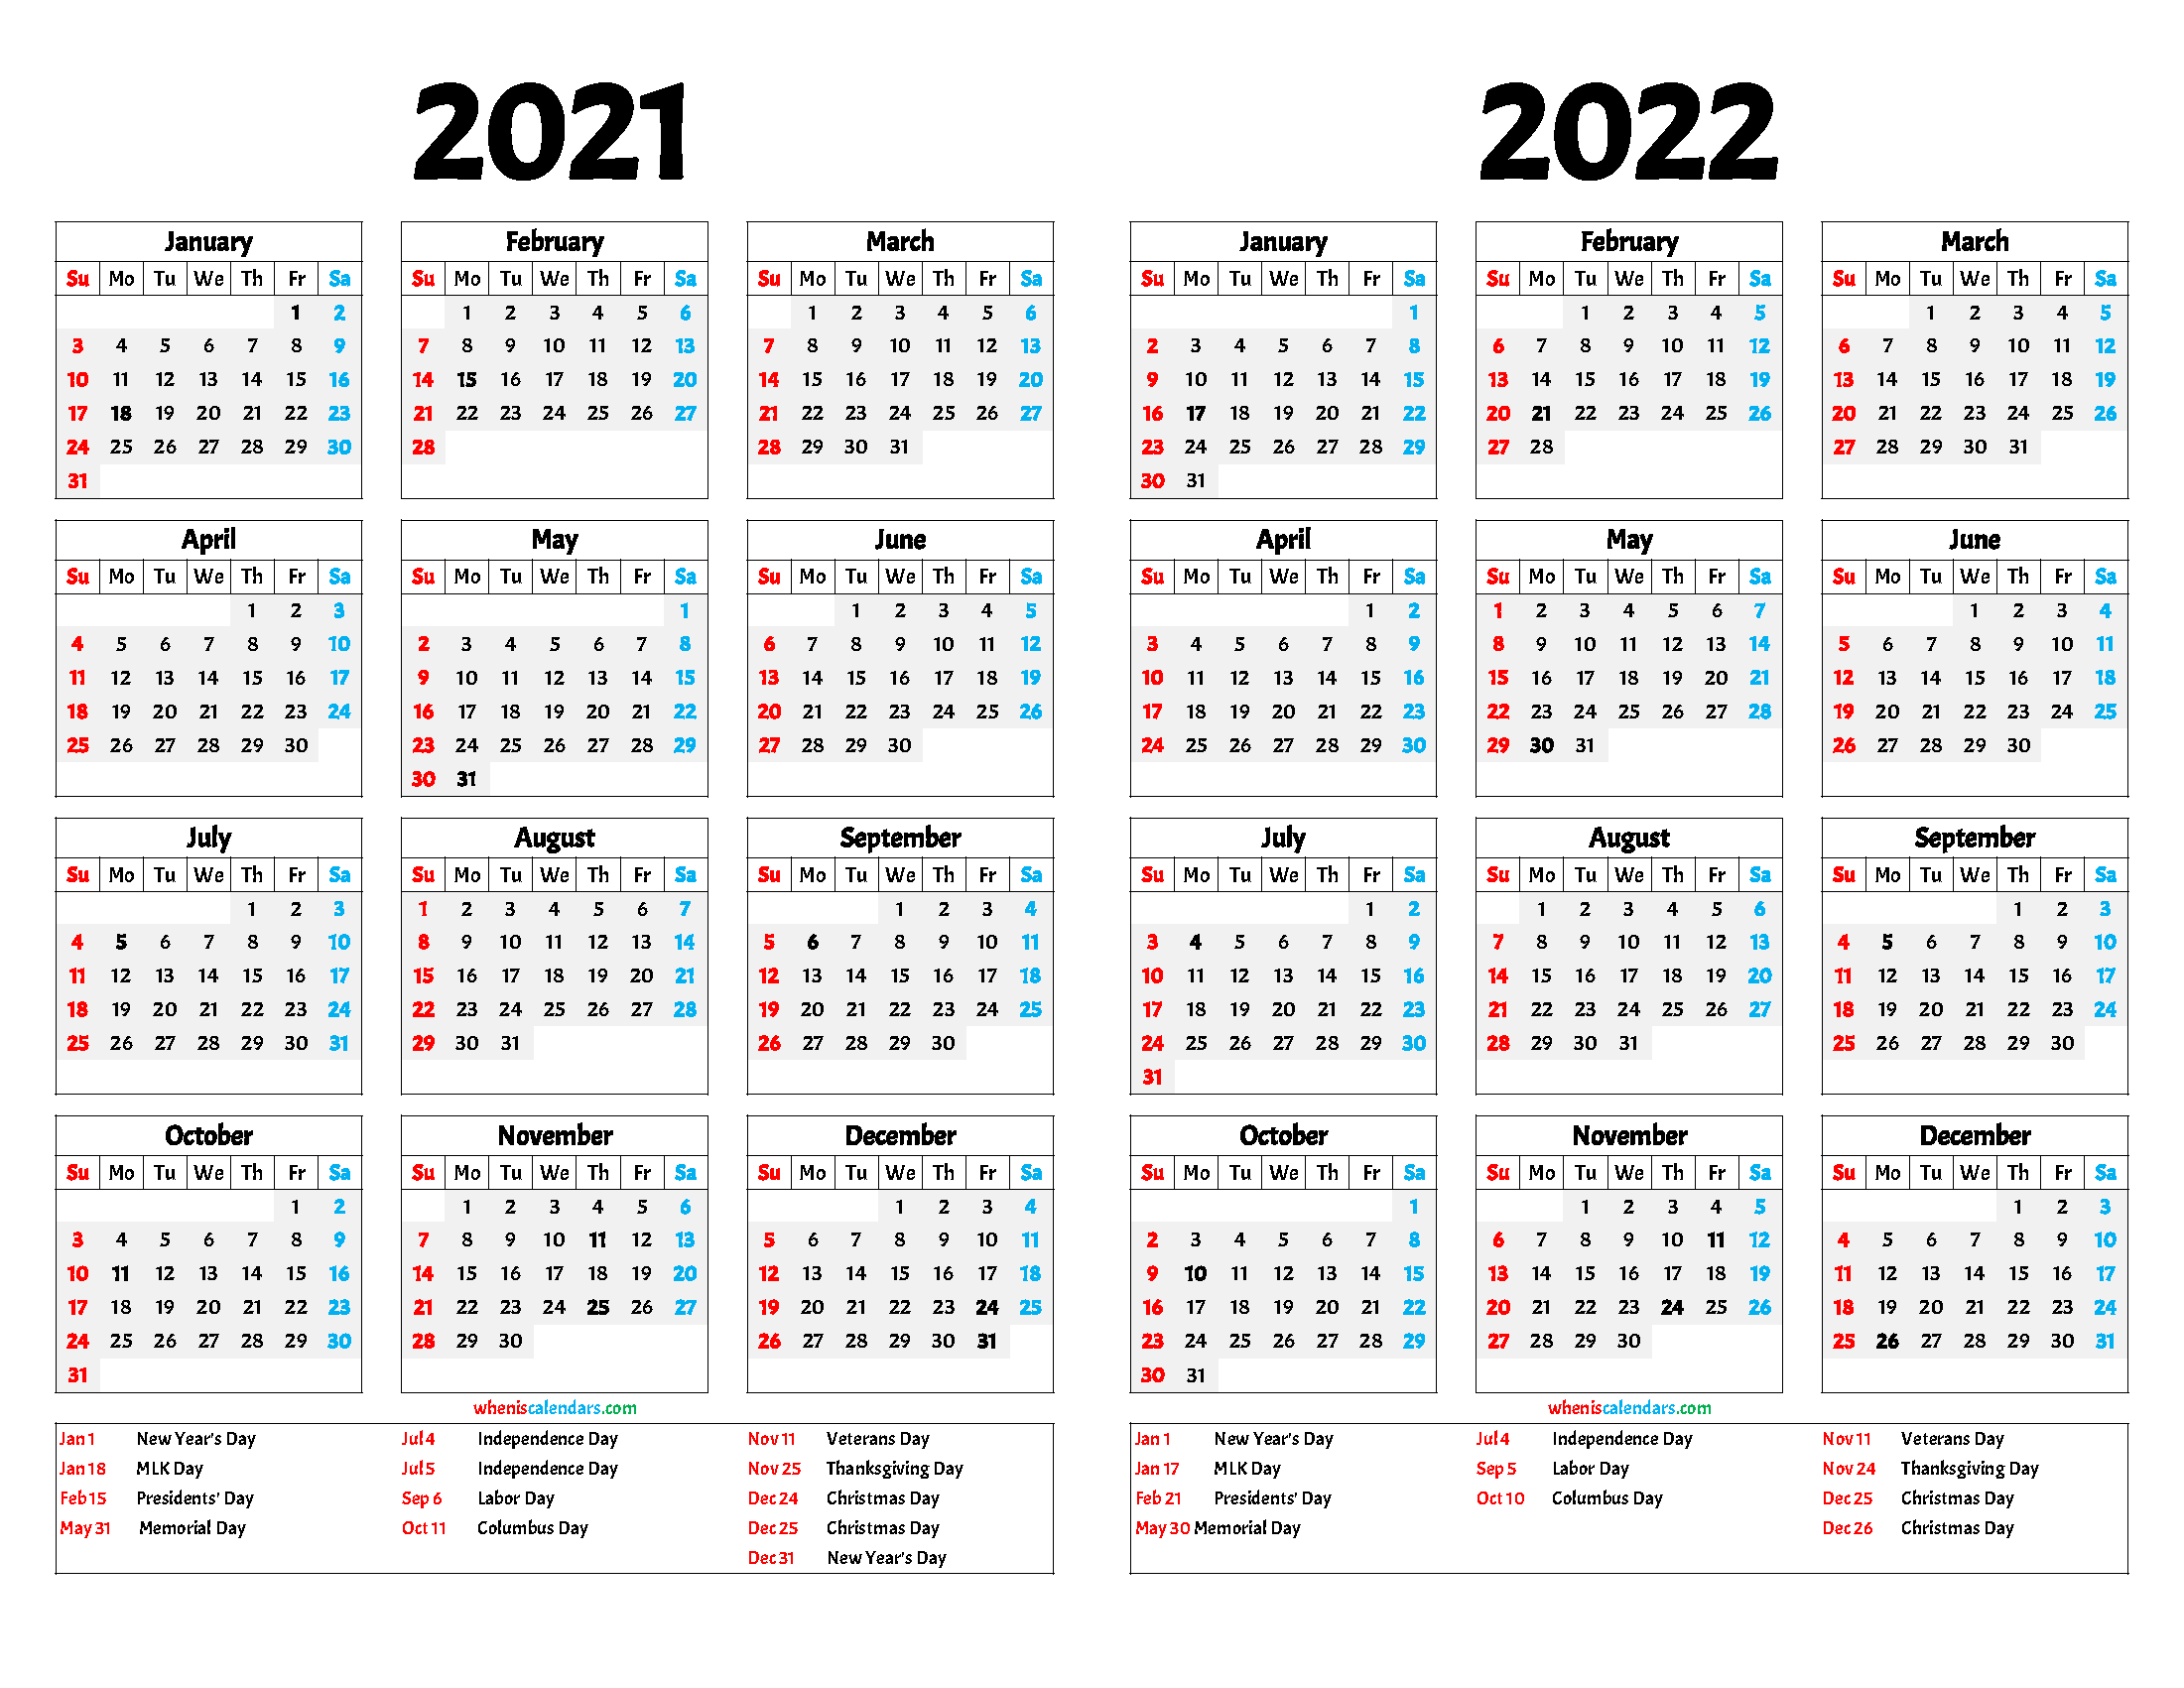 Free Printable Calendars 2021 2022 Free Printable Cal